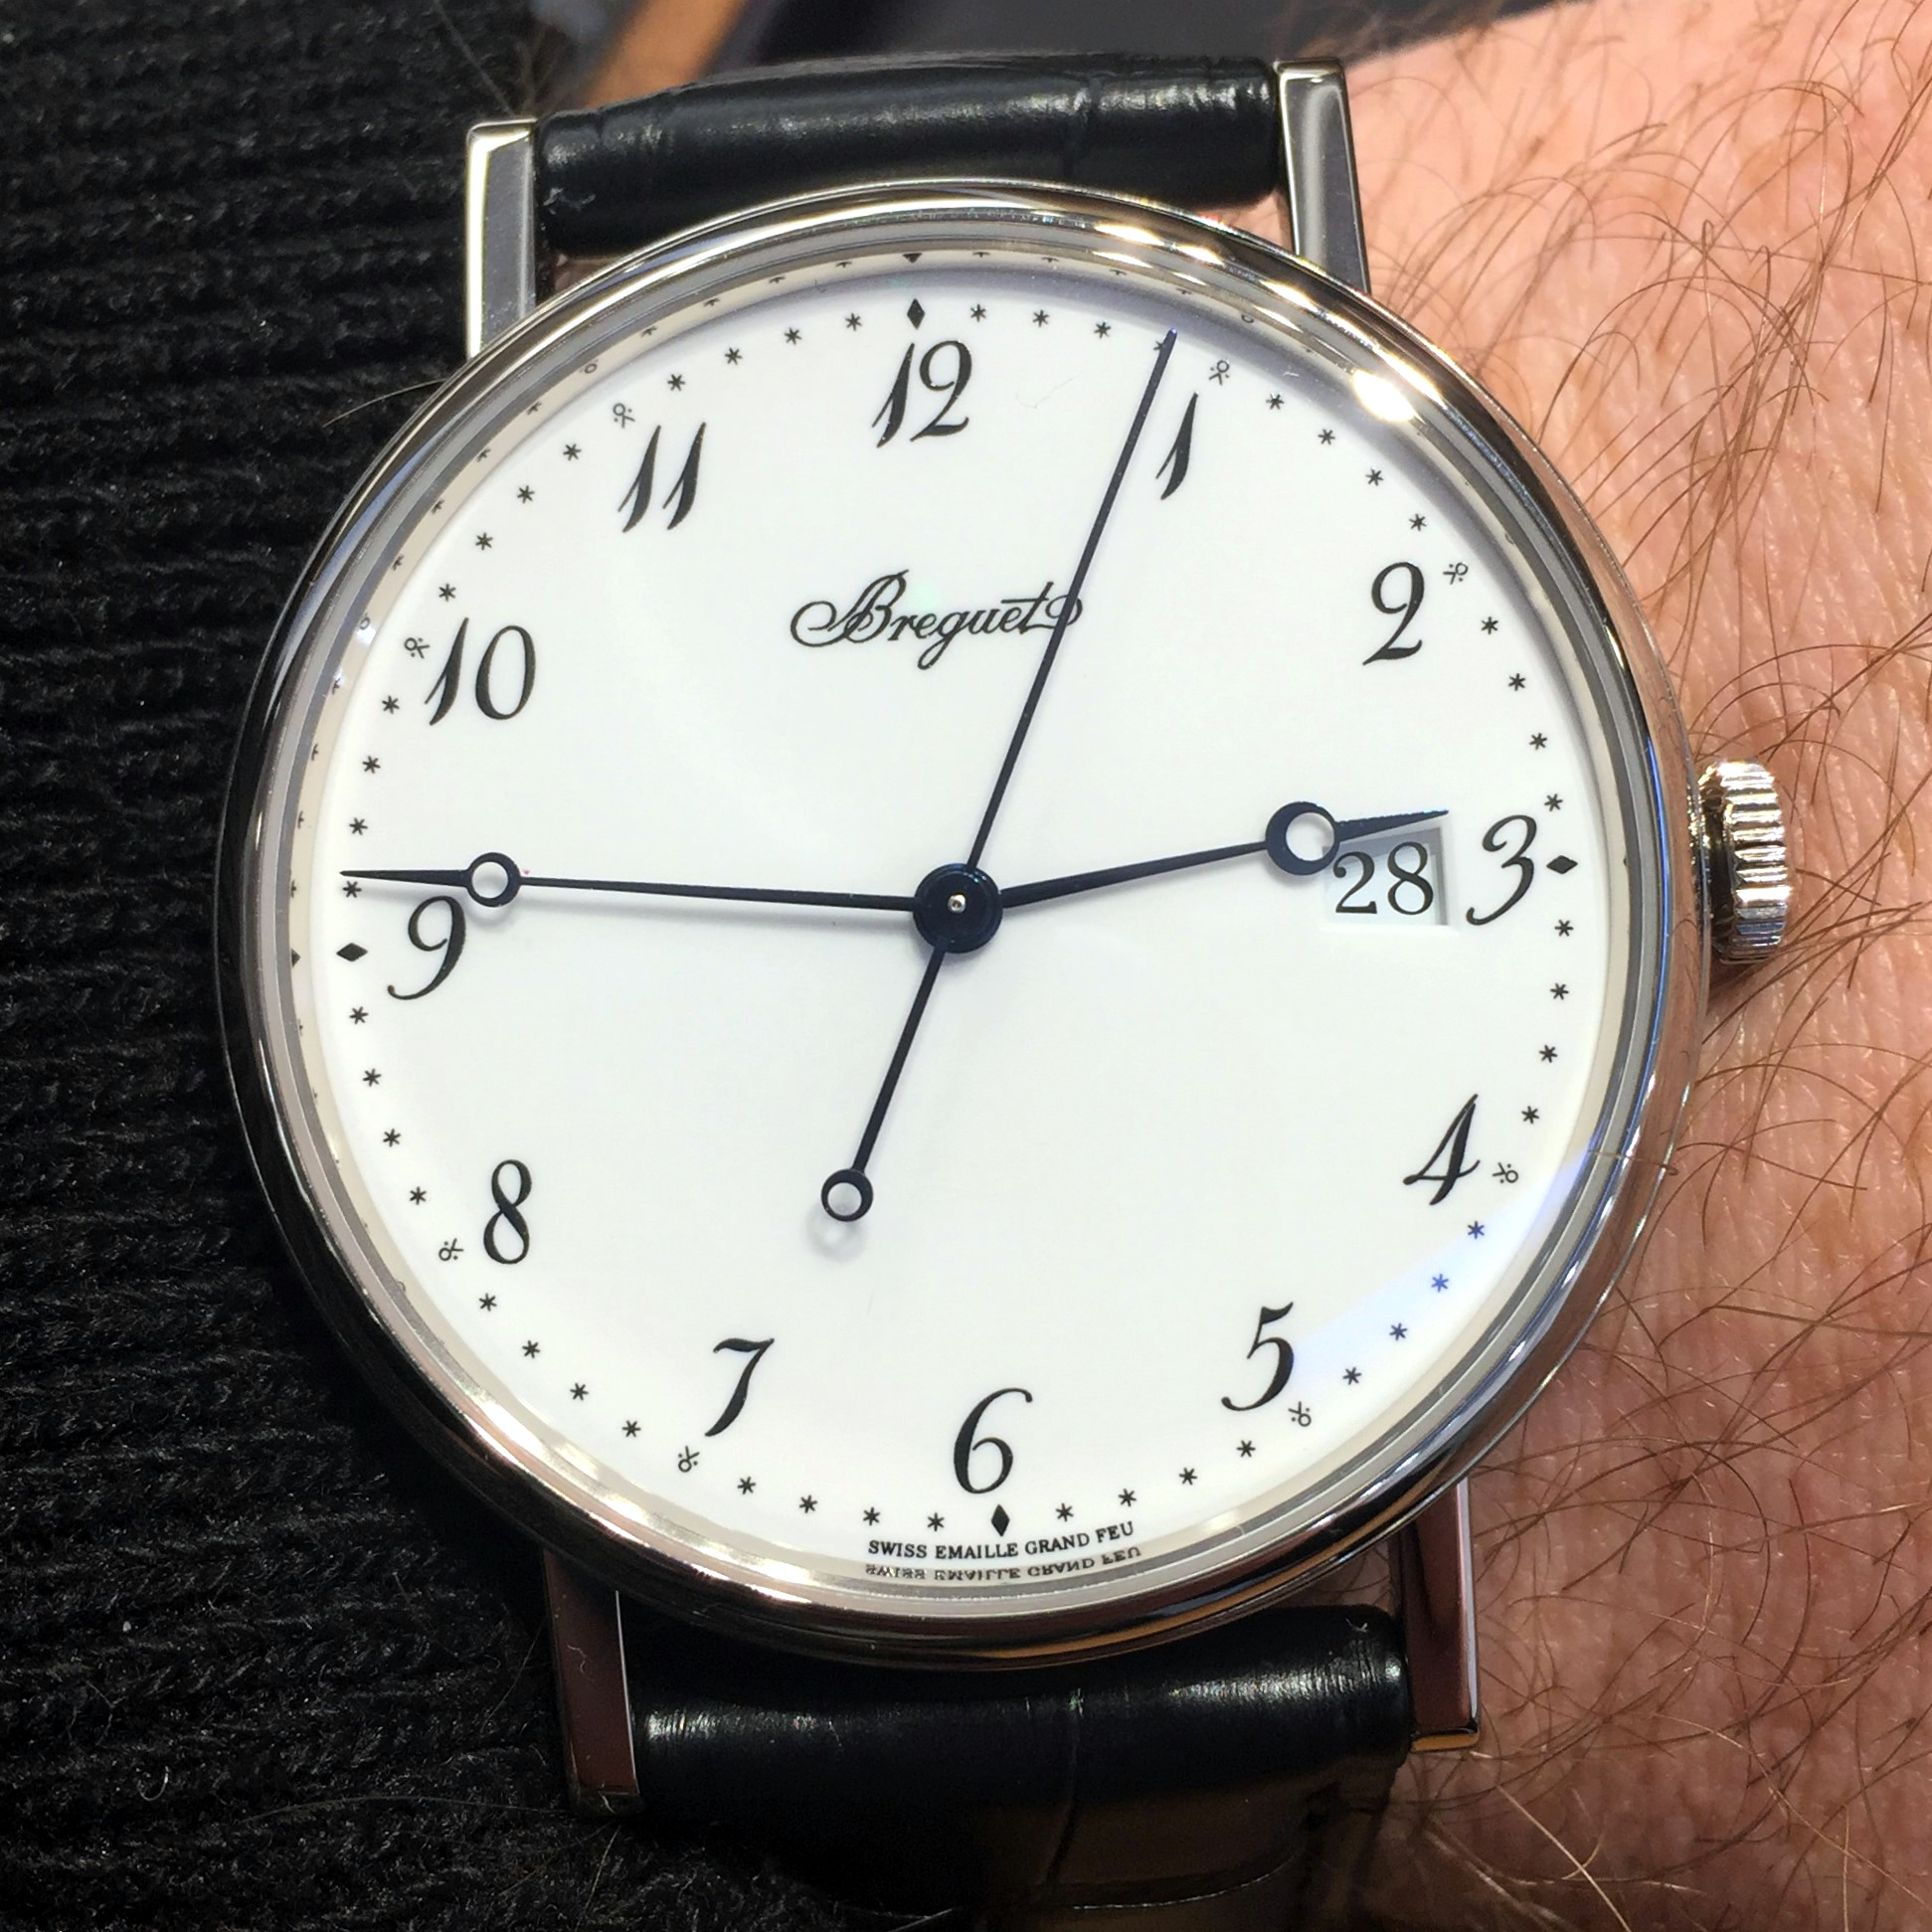 Breguet Classique with grand feu watch enamelling techniques